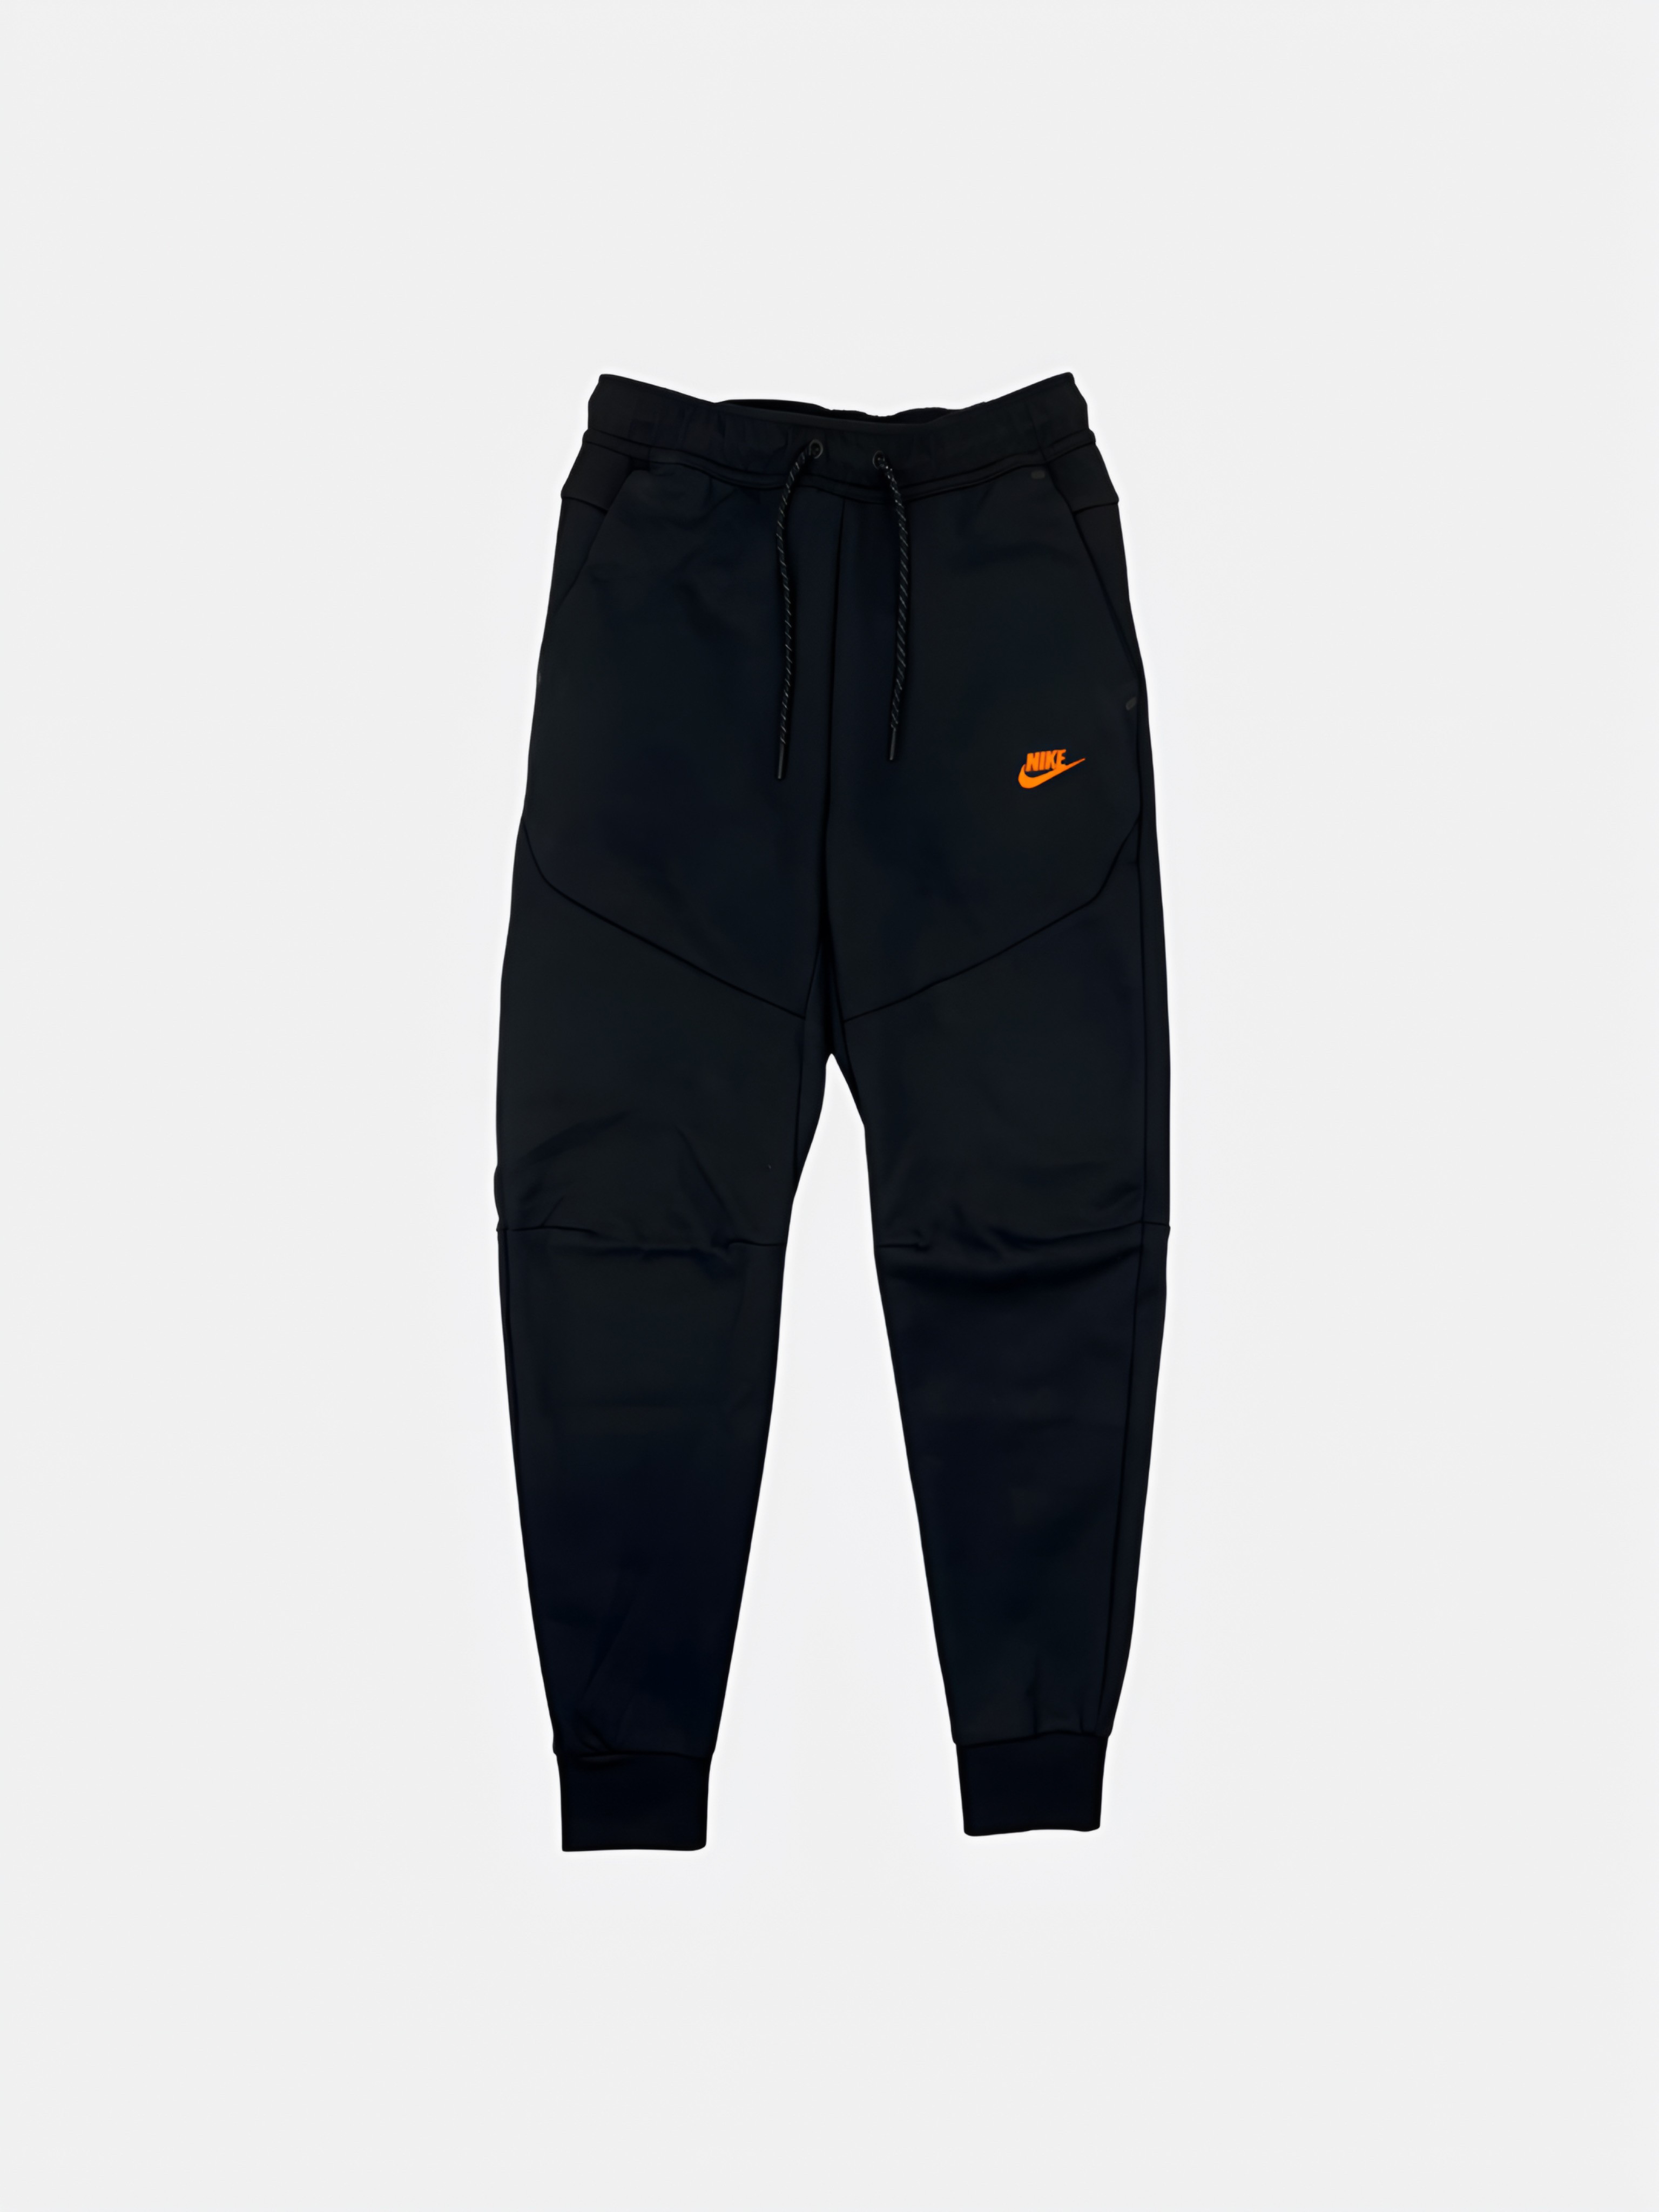 Nike Tech Fleece Jogger Premium - Black Anhtracite Orange